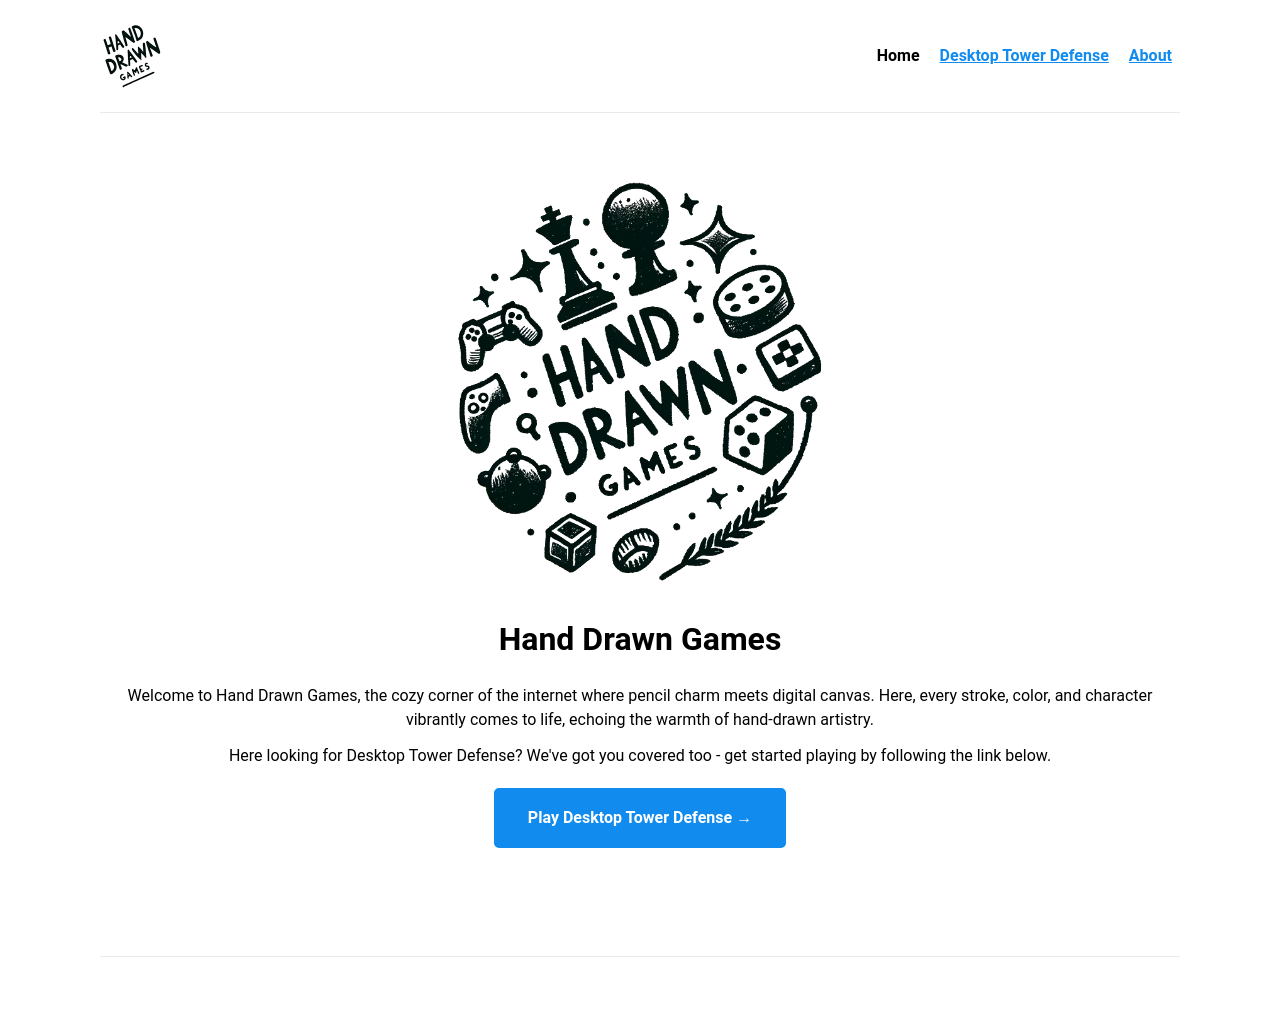 handdrawngames.com